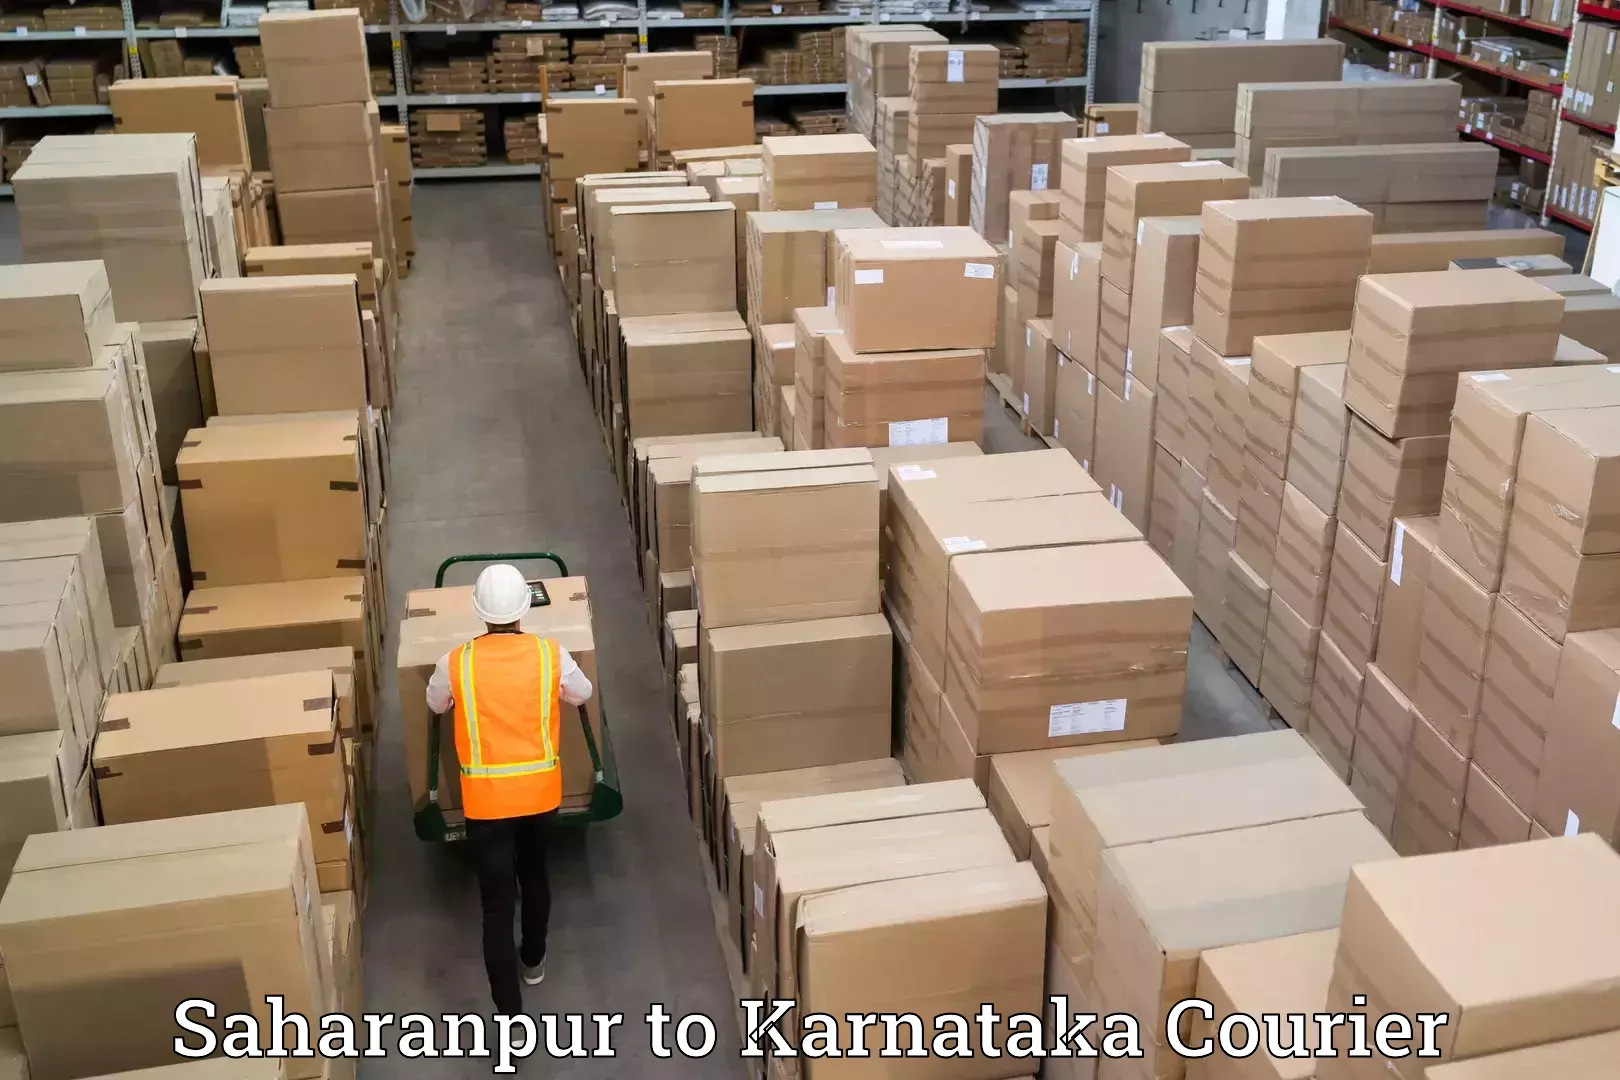 Trusted relocation experts Saharanpur to Karnataka